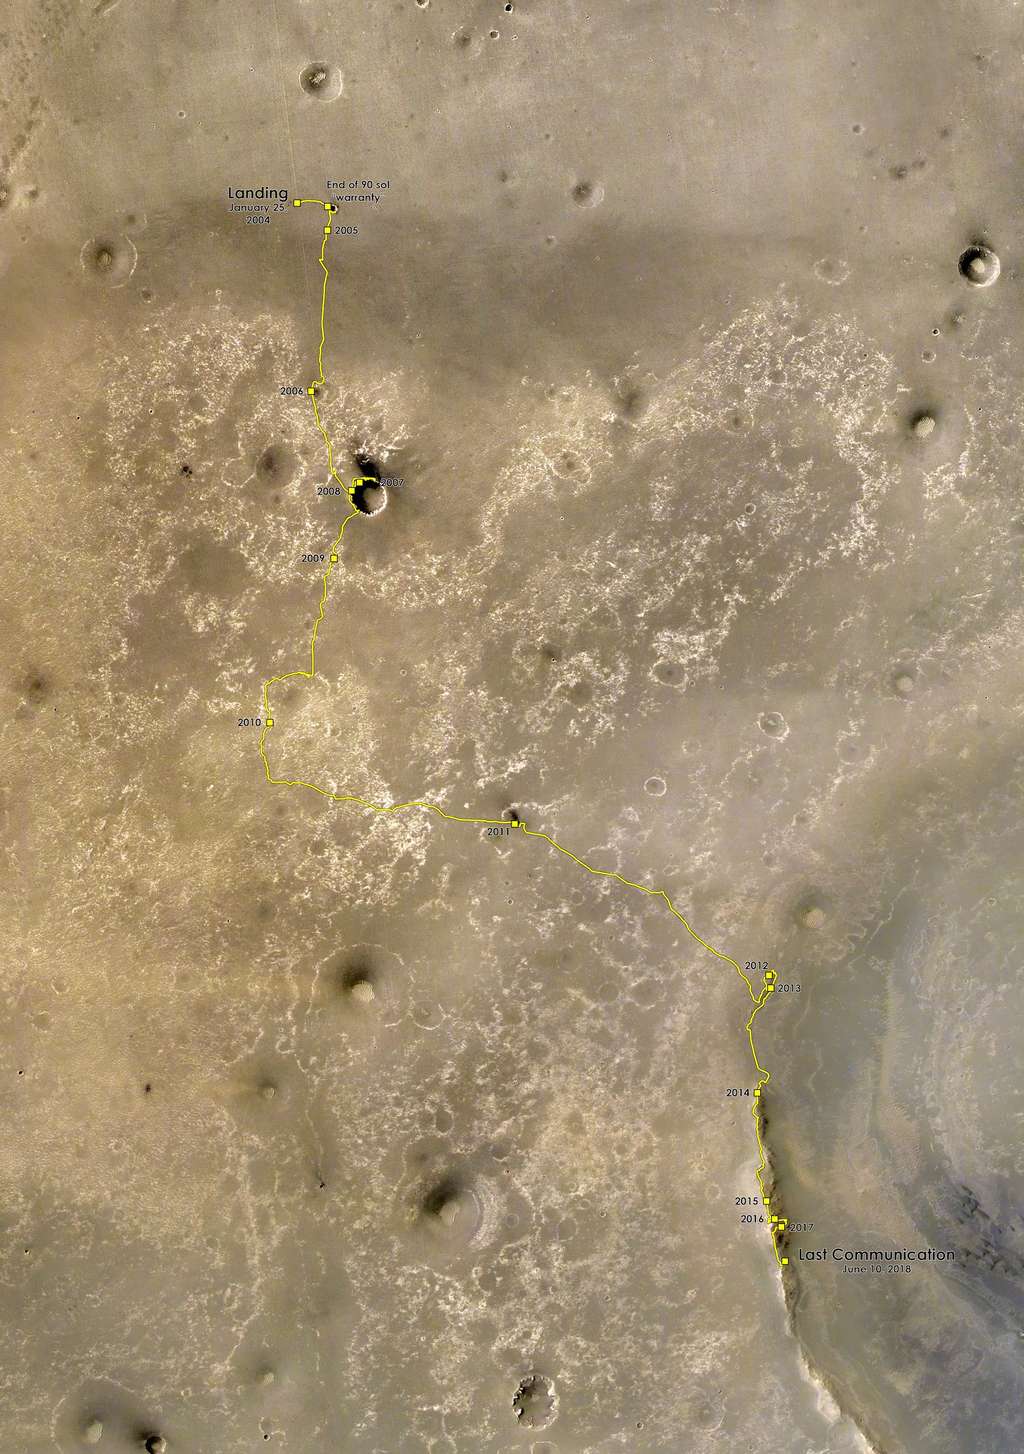 Le périple d'Opportunity sur Mars en presque 15 ans d'exploration. © Nasa, JPL-Caltech, MSSS, ESA, DLR, FU Berlin, CC by-sa 3.0 IGO, Justin Cowart